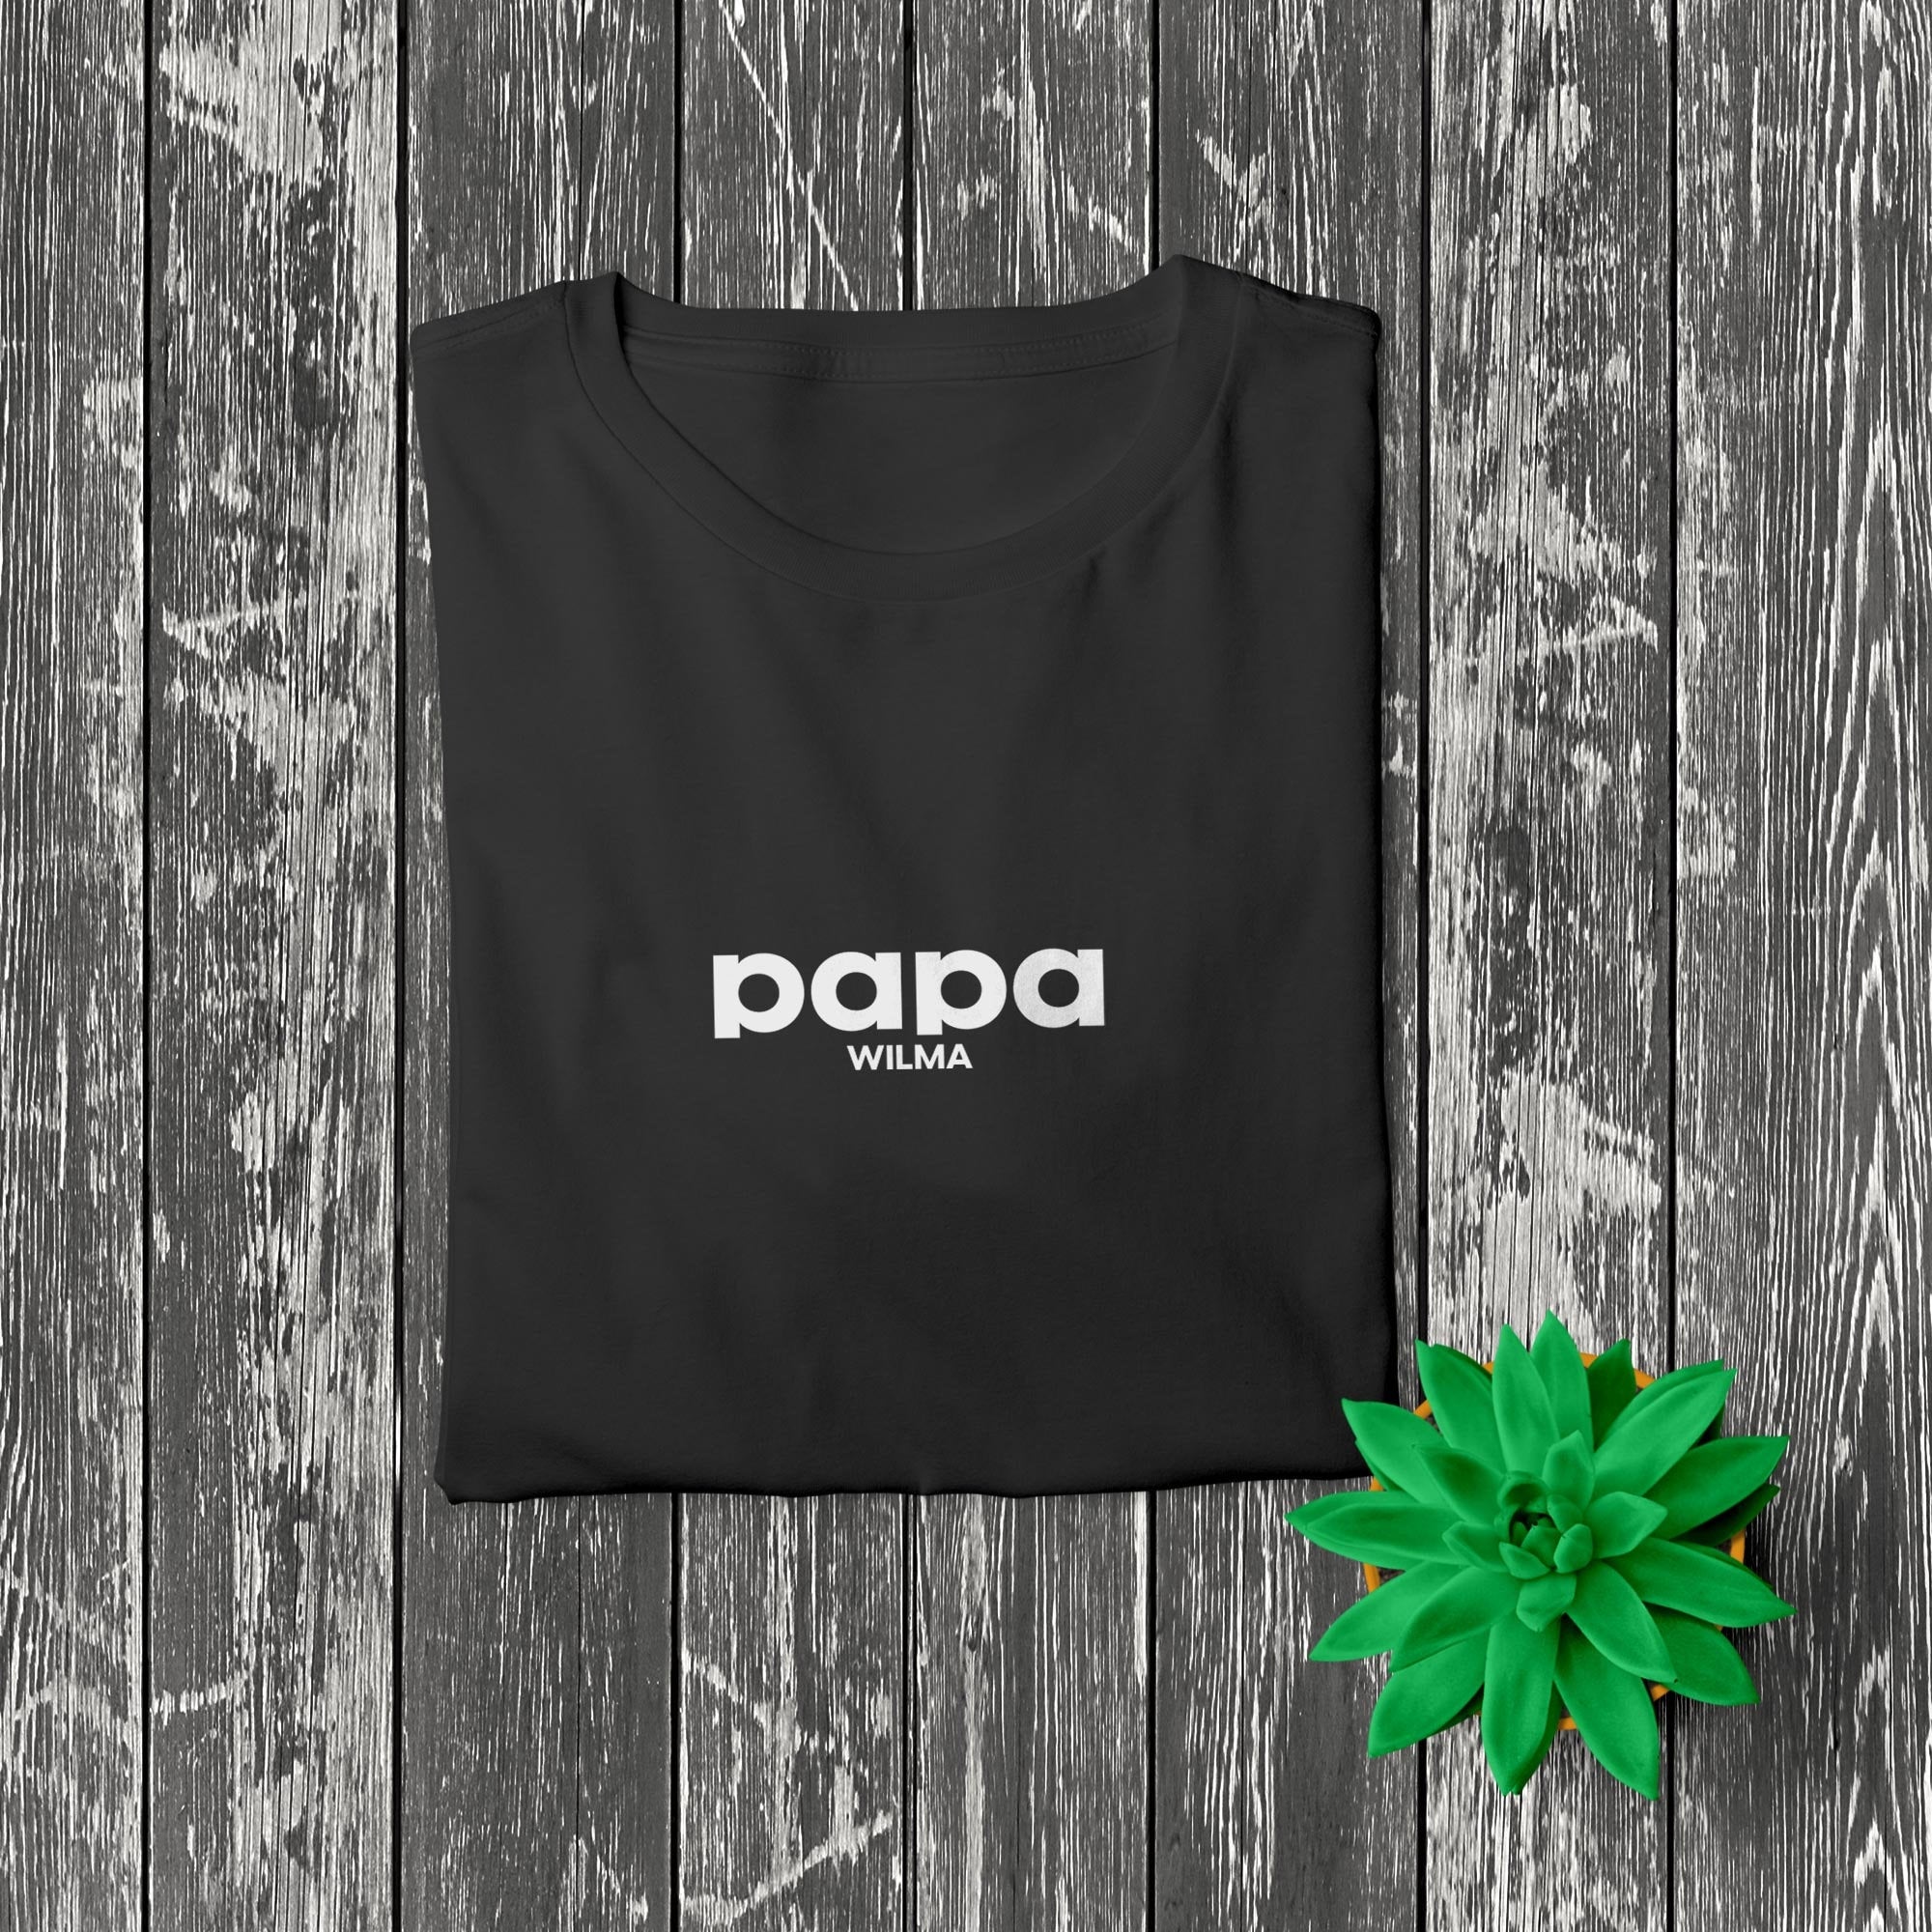 Papa T-Shirt Simple, personalisiert mit Namen